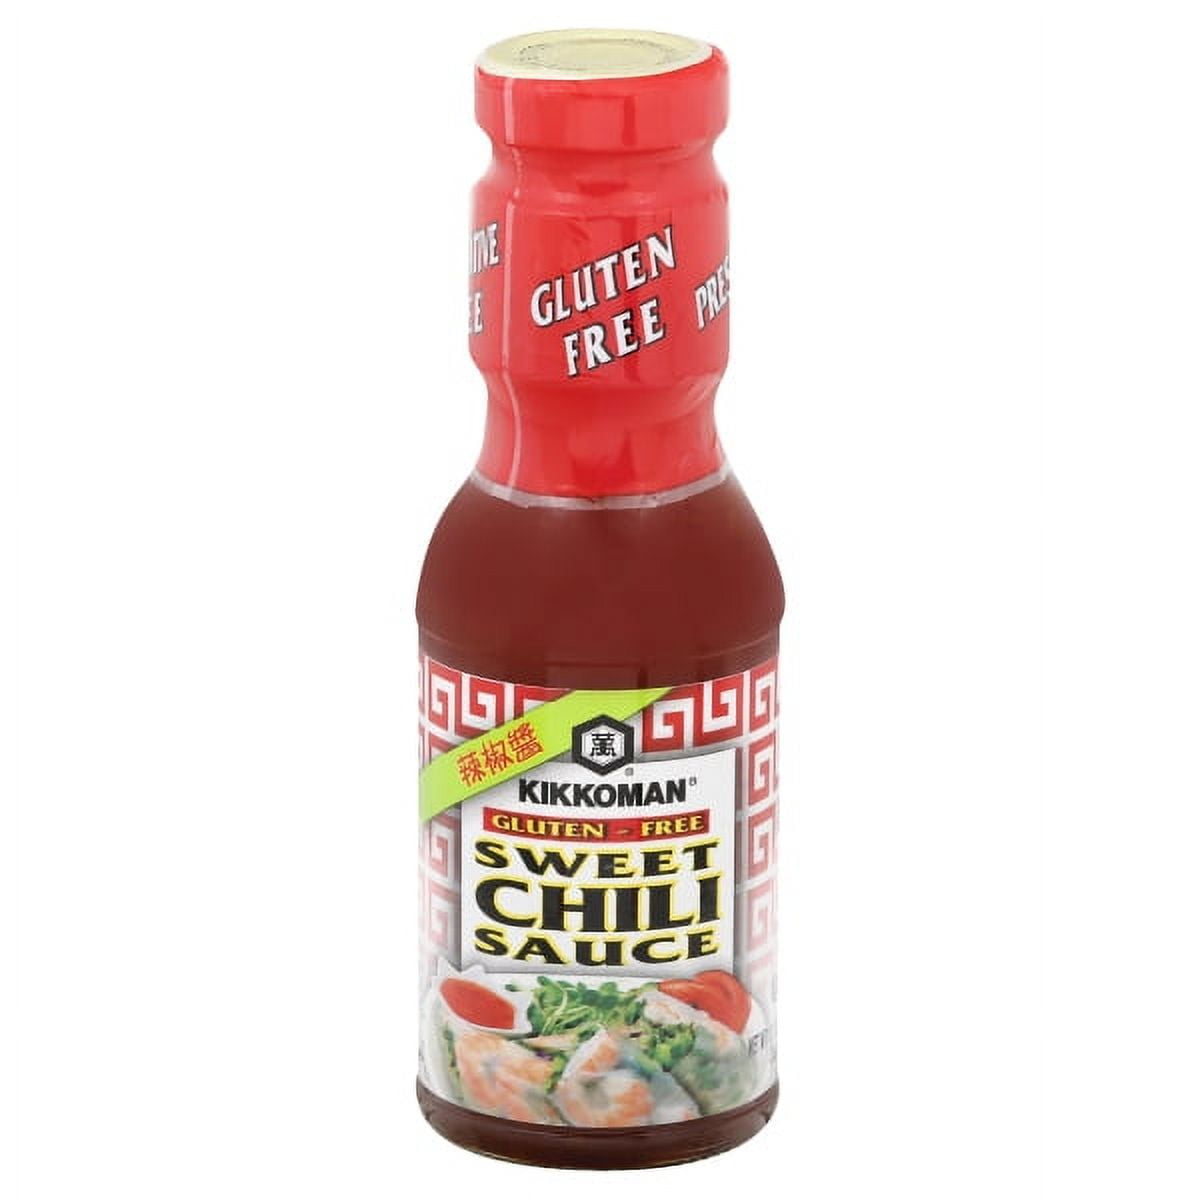 Kikkoman® Gluten Free Sriracha Hot Chili Sauce, 20 oz - Harris Teeter